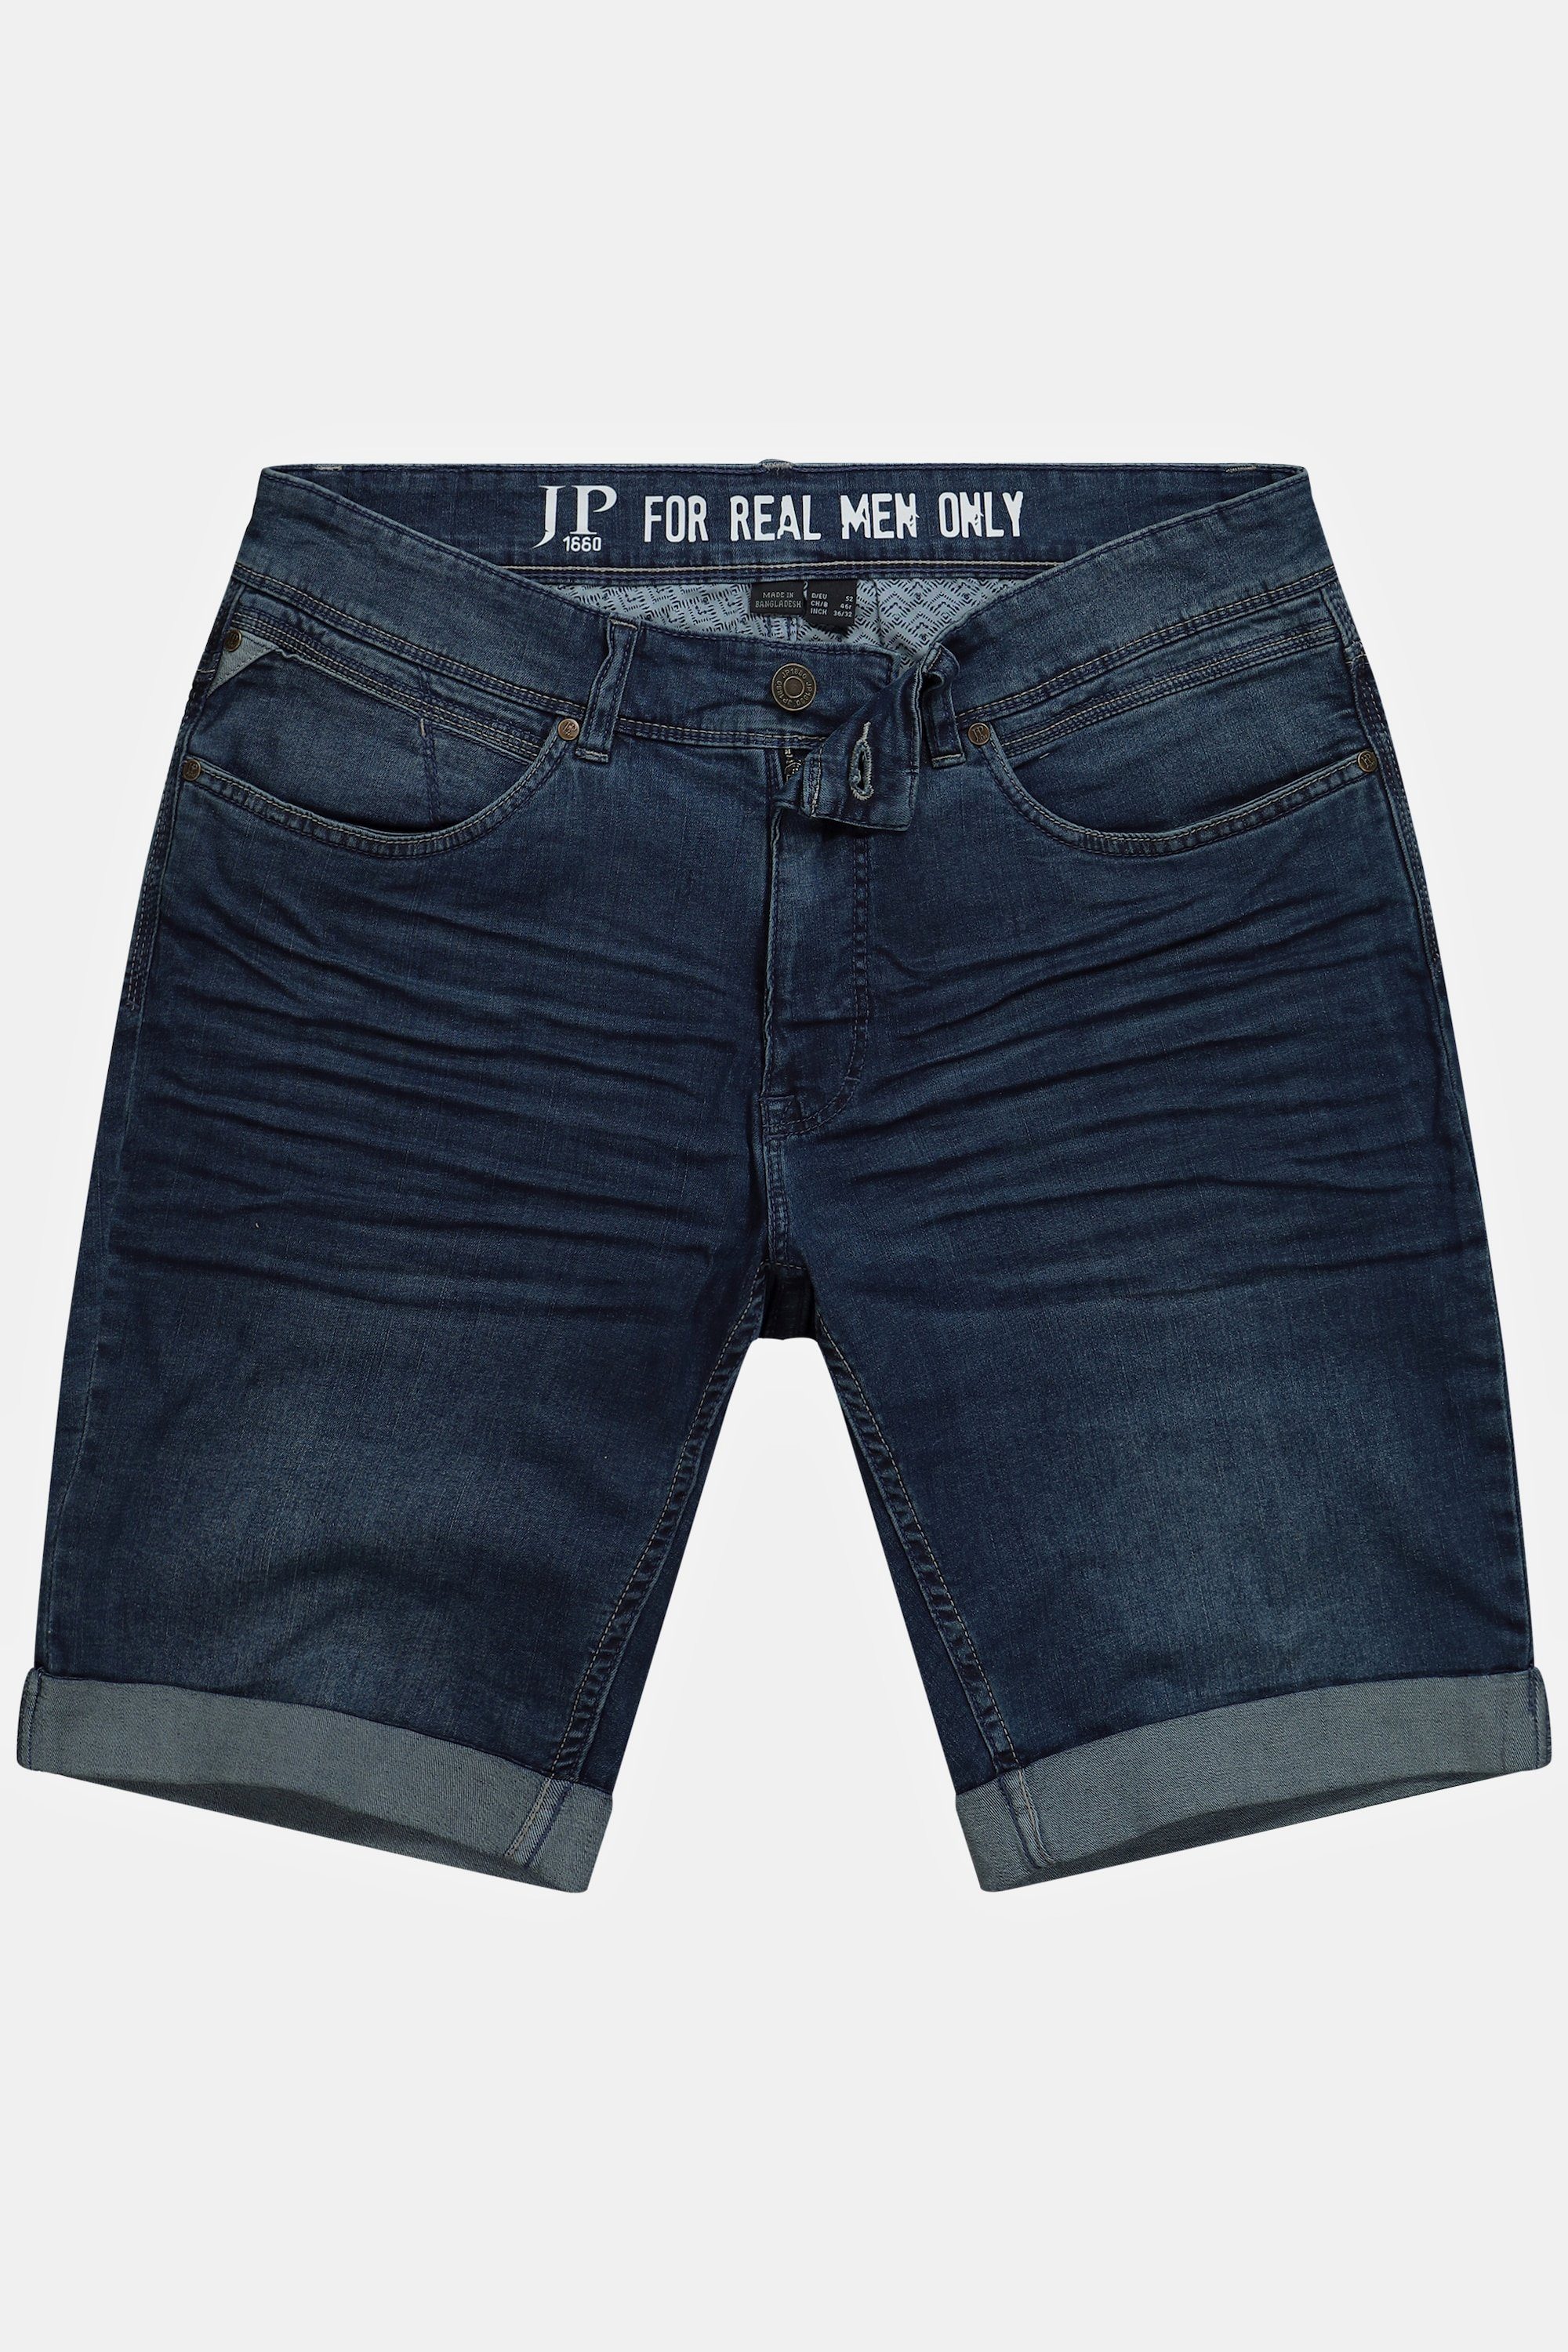 JP1880 Jeansbermudas Lightweight-Jeansbermuda Regular Fit blue dark denim 5-Pocket